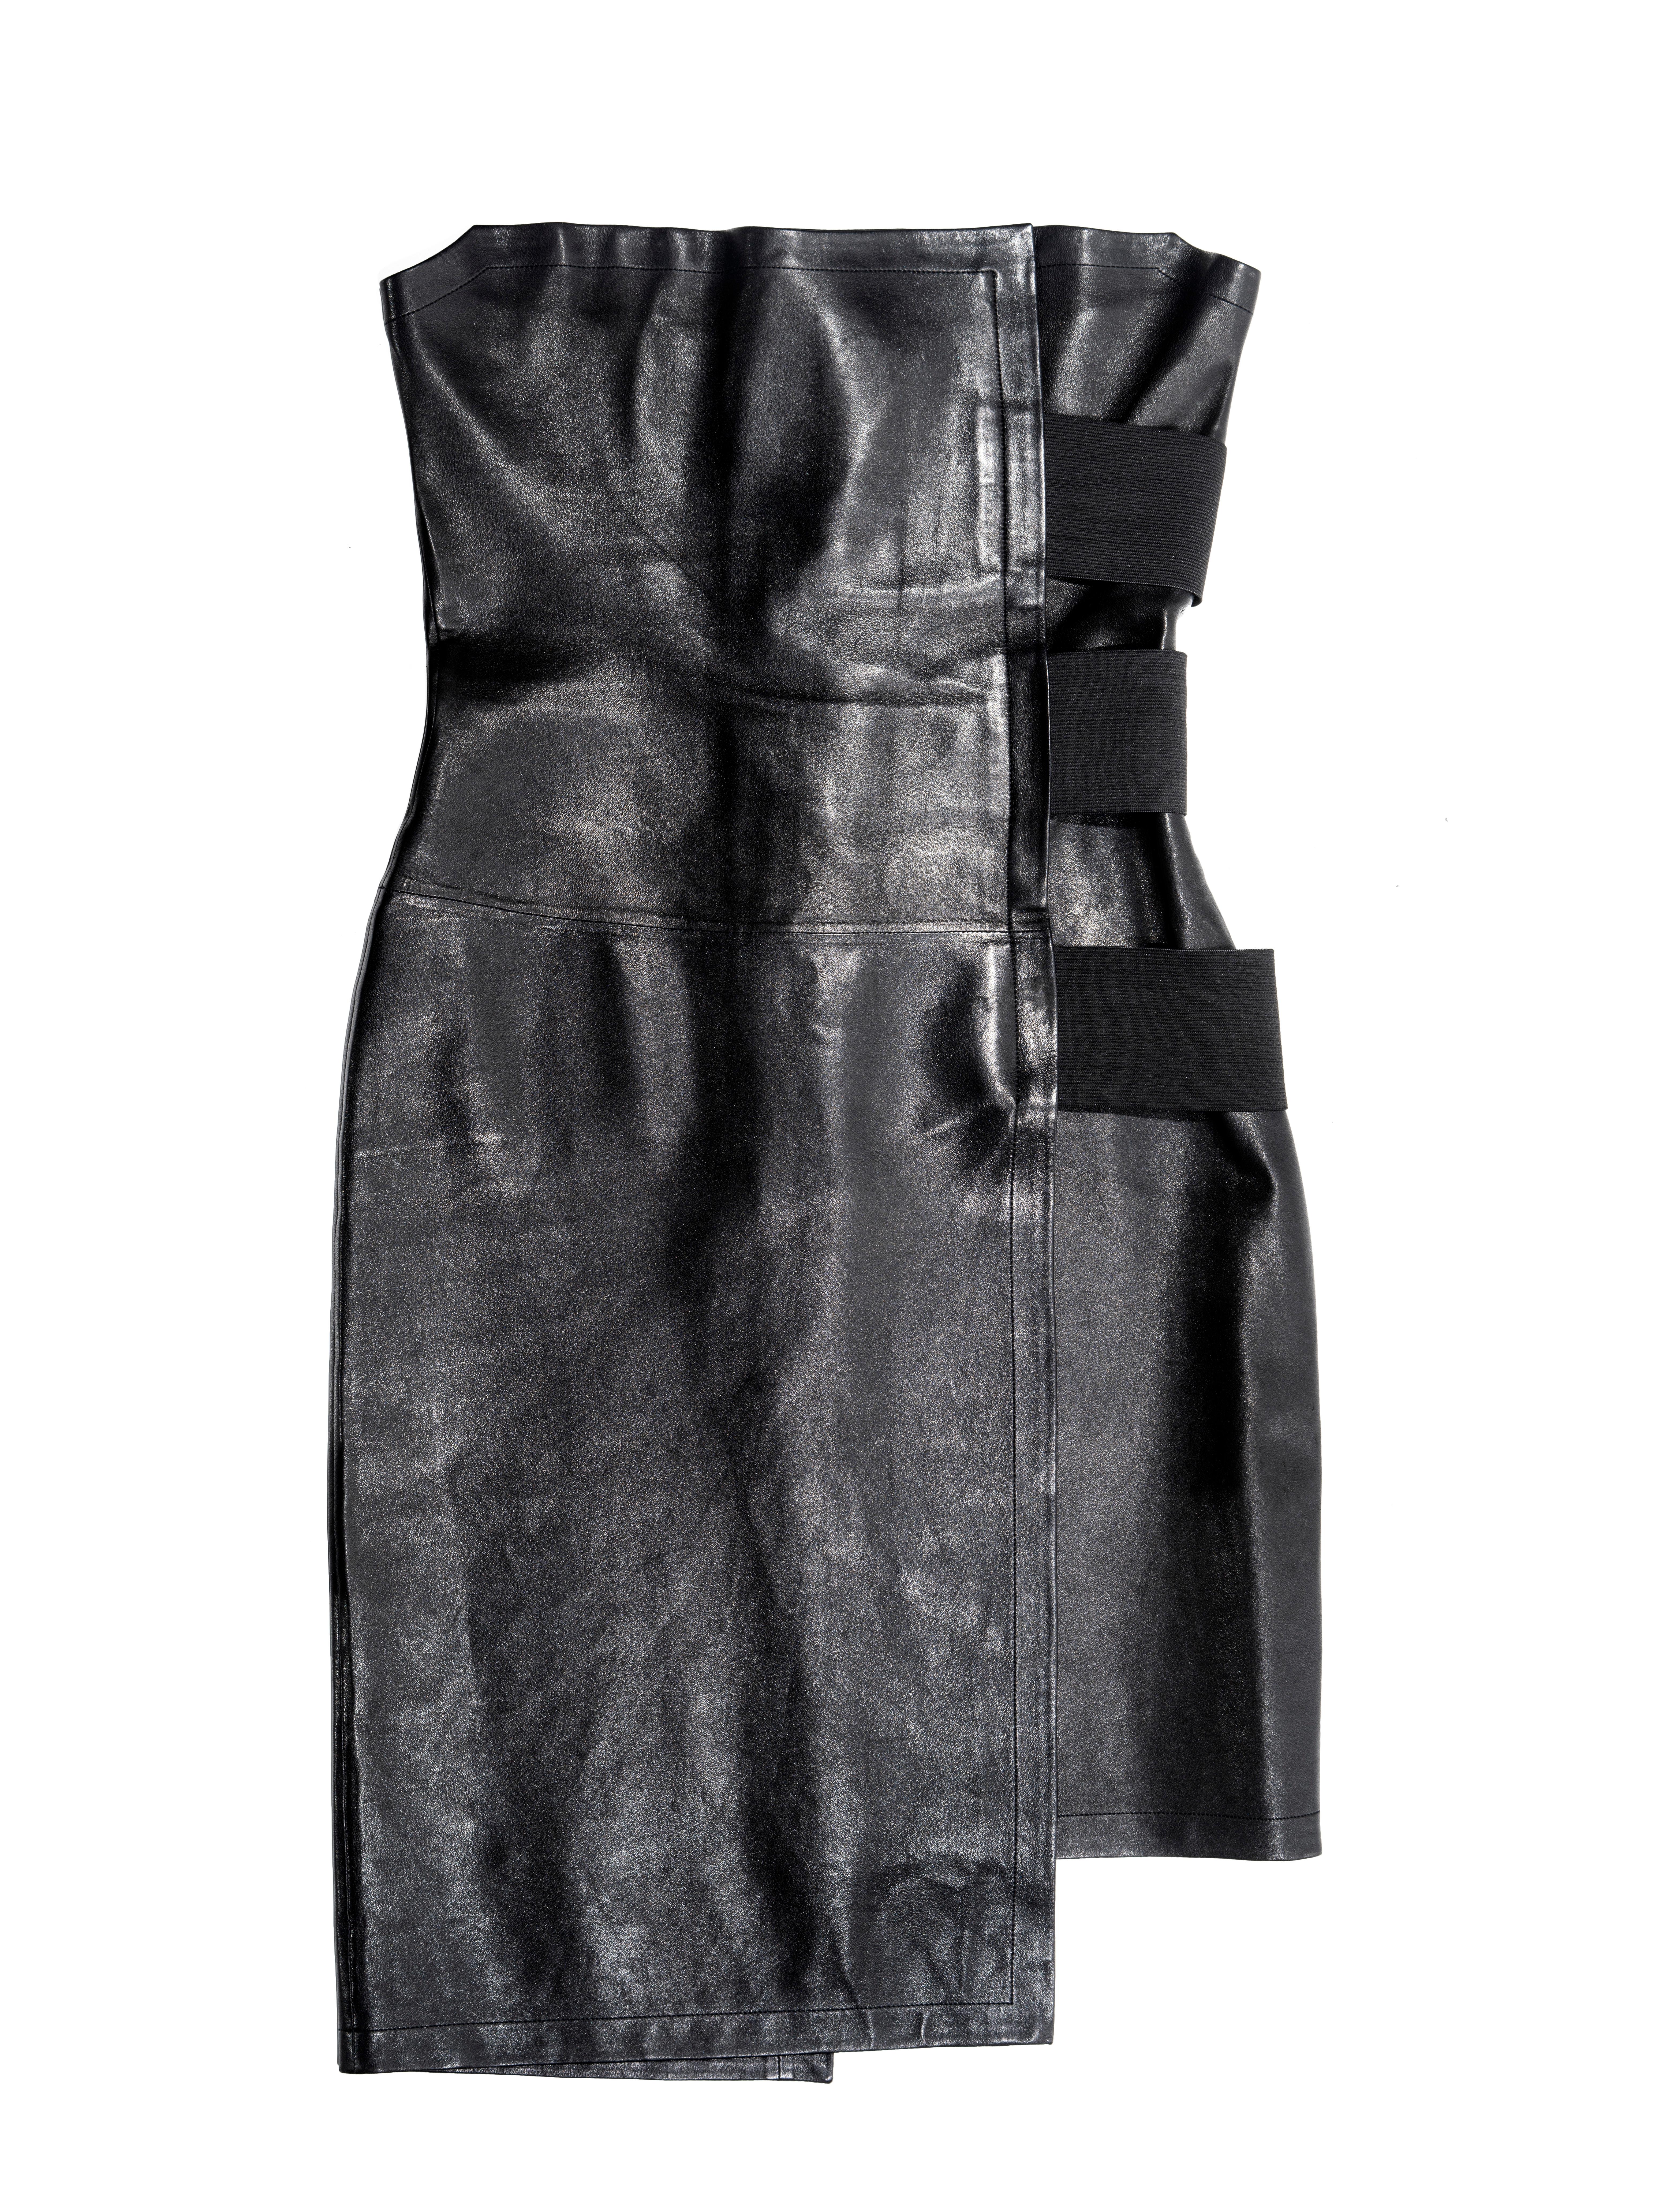 black leather strapless dress